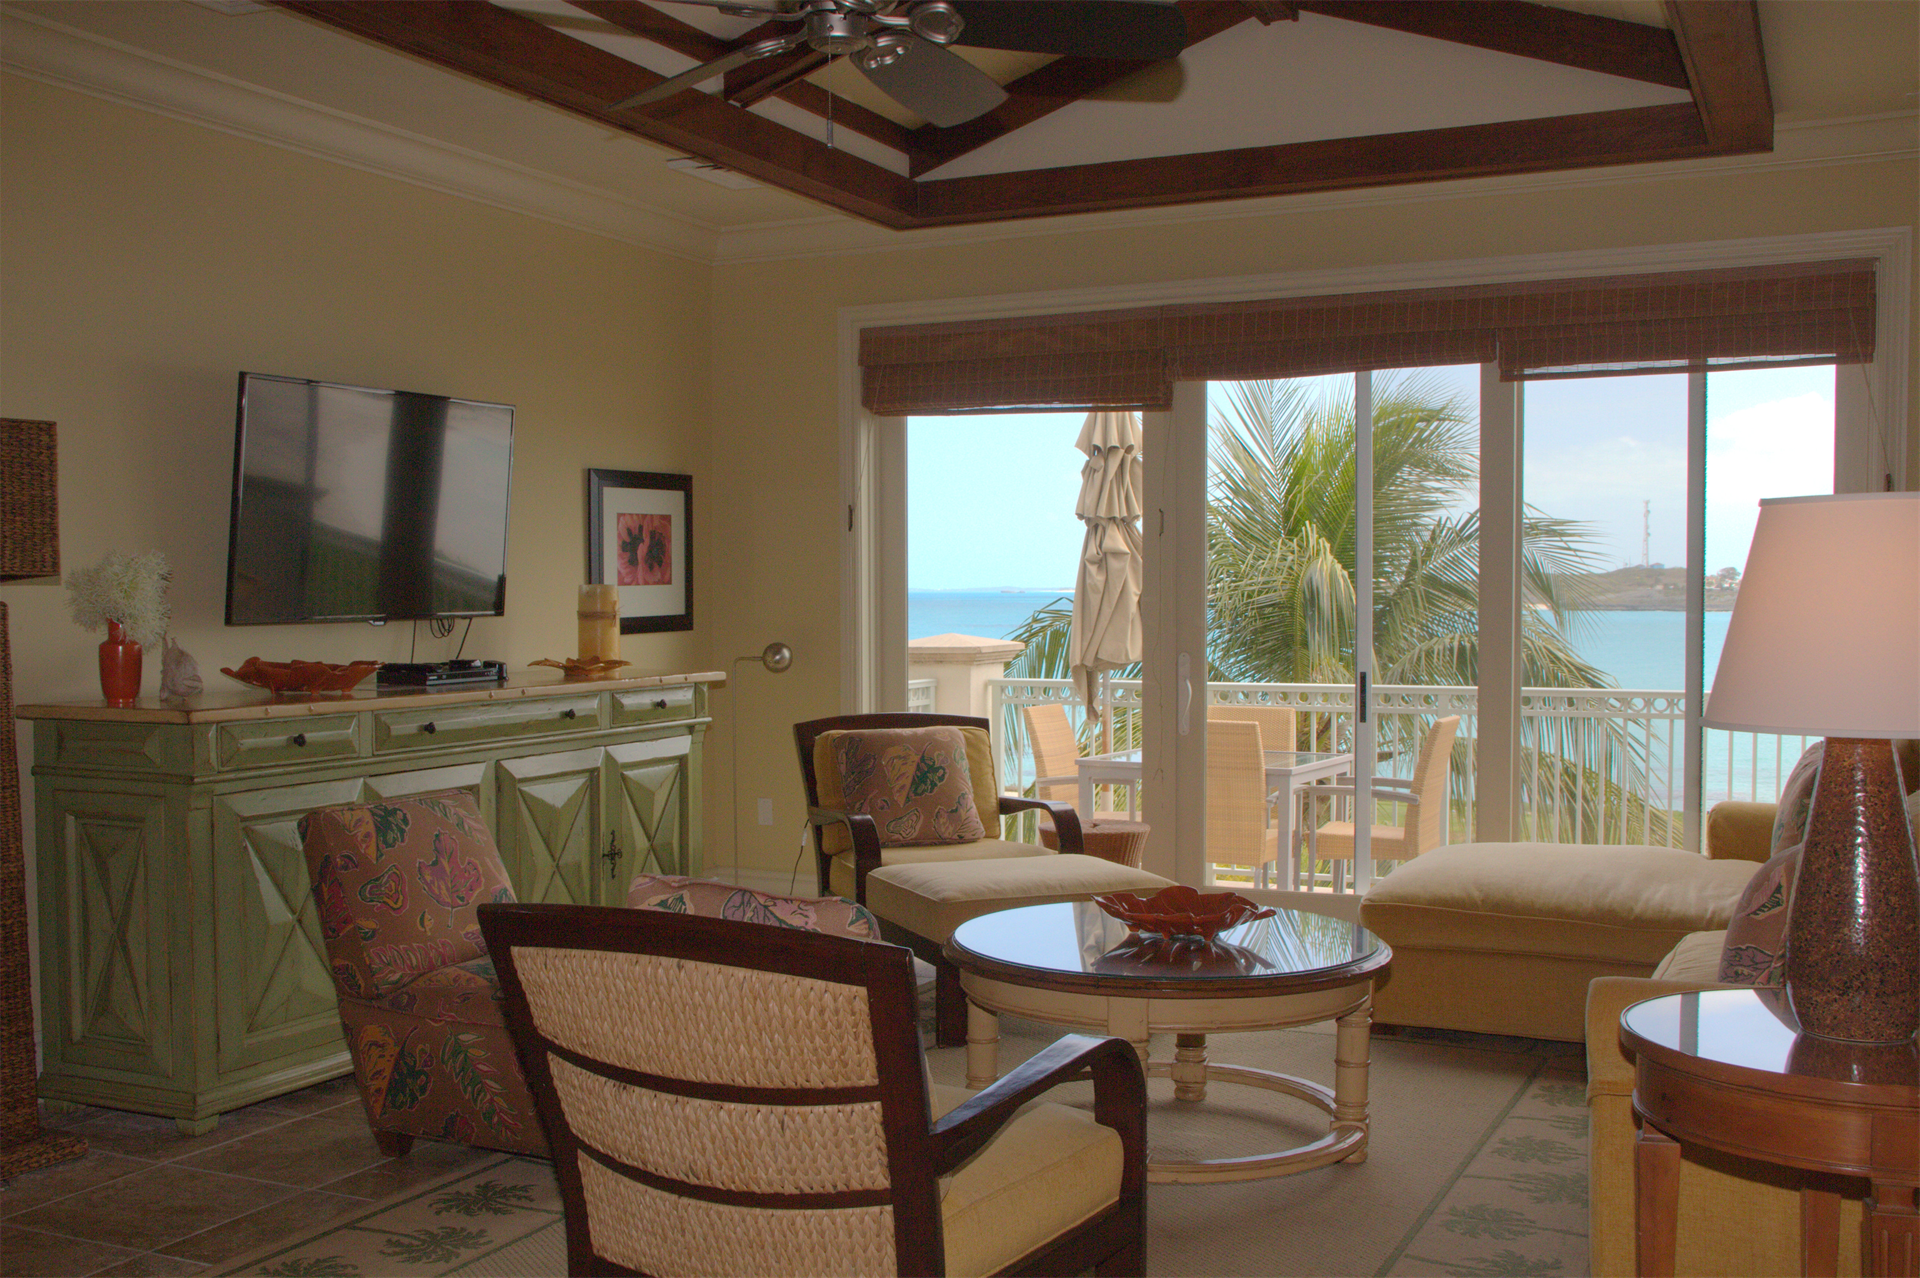 Condo / Townhome / Villa for Sale at Emerald Bay, Exuma Bahamas